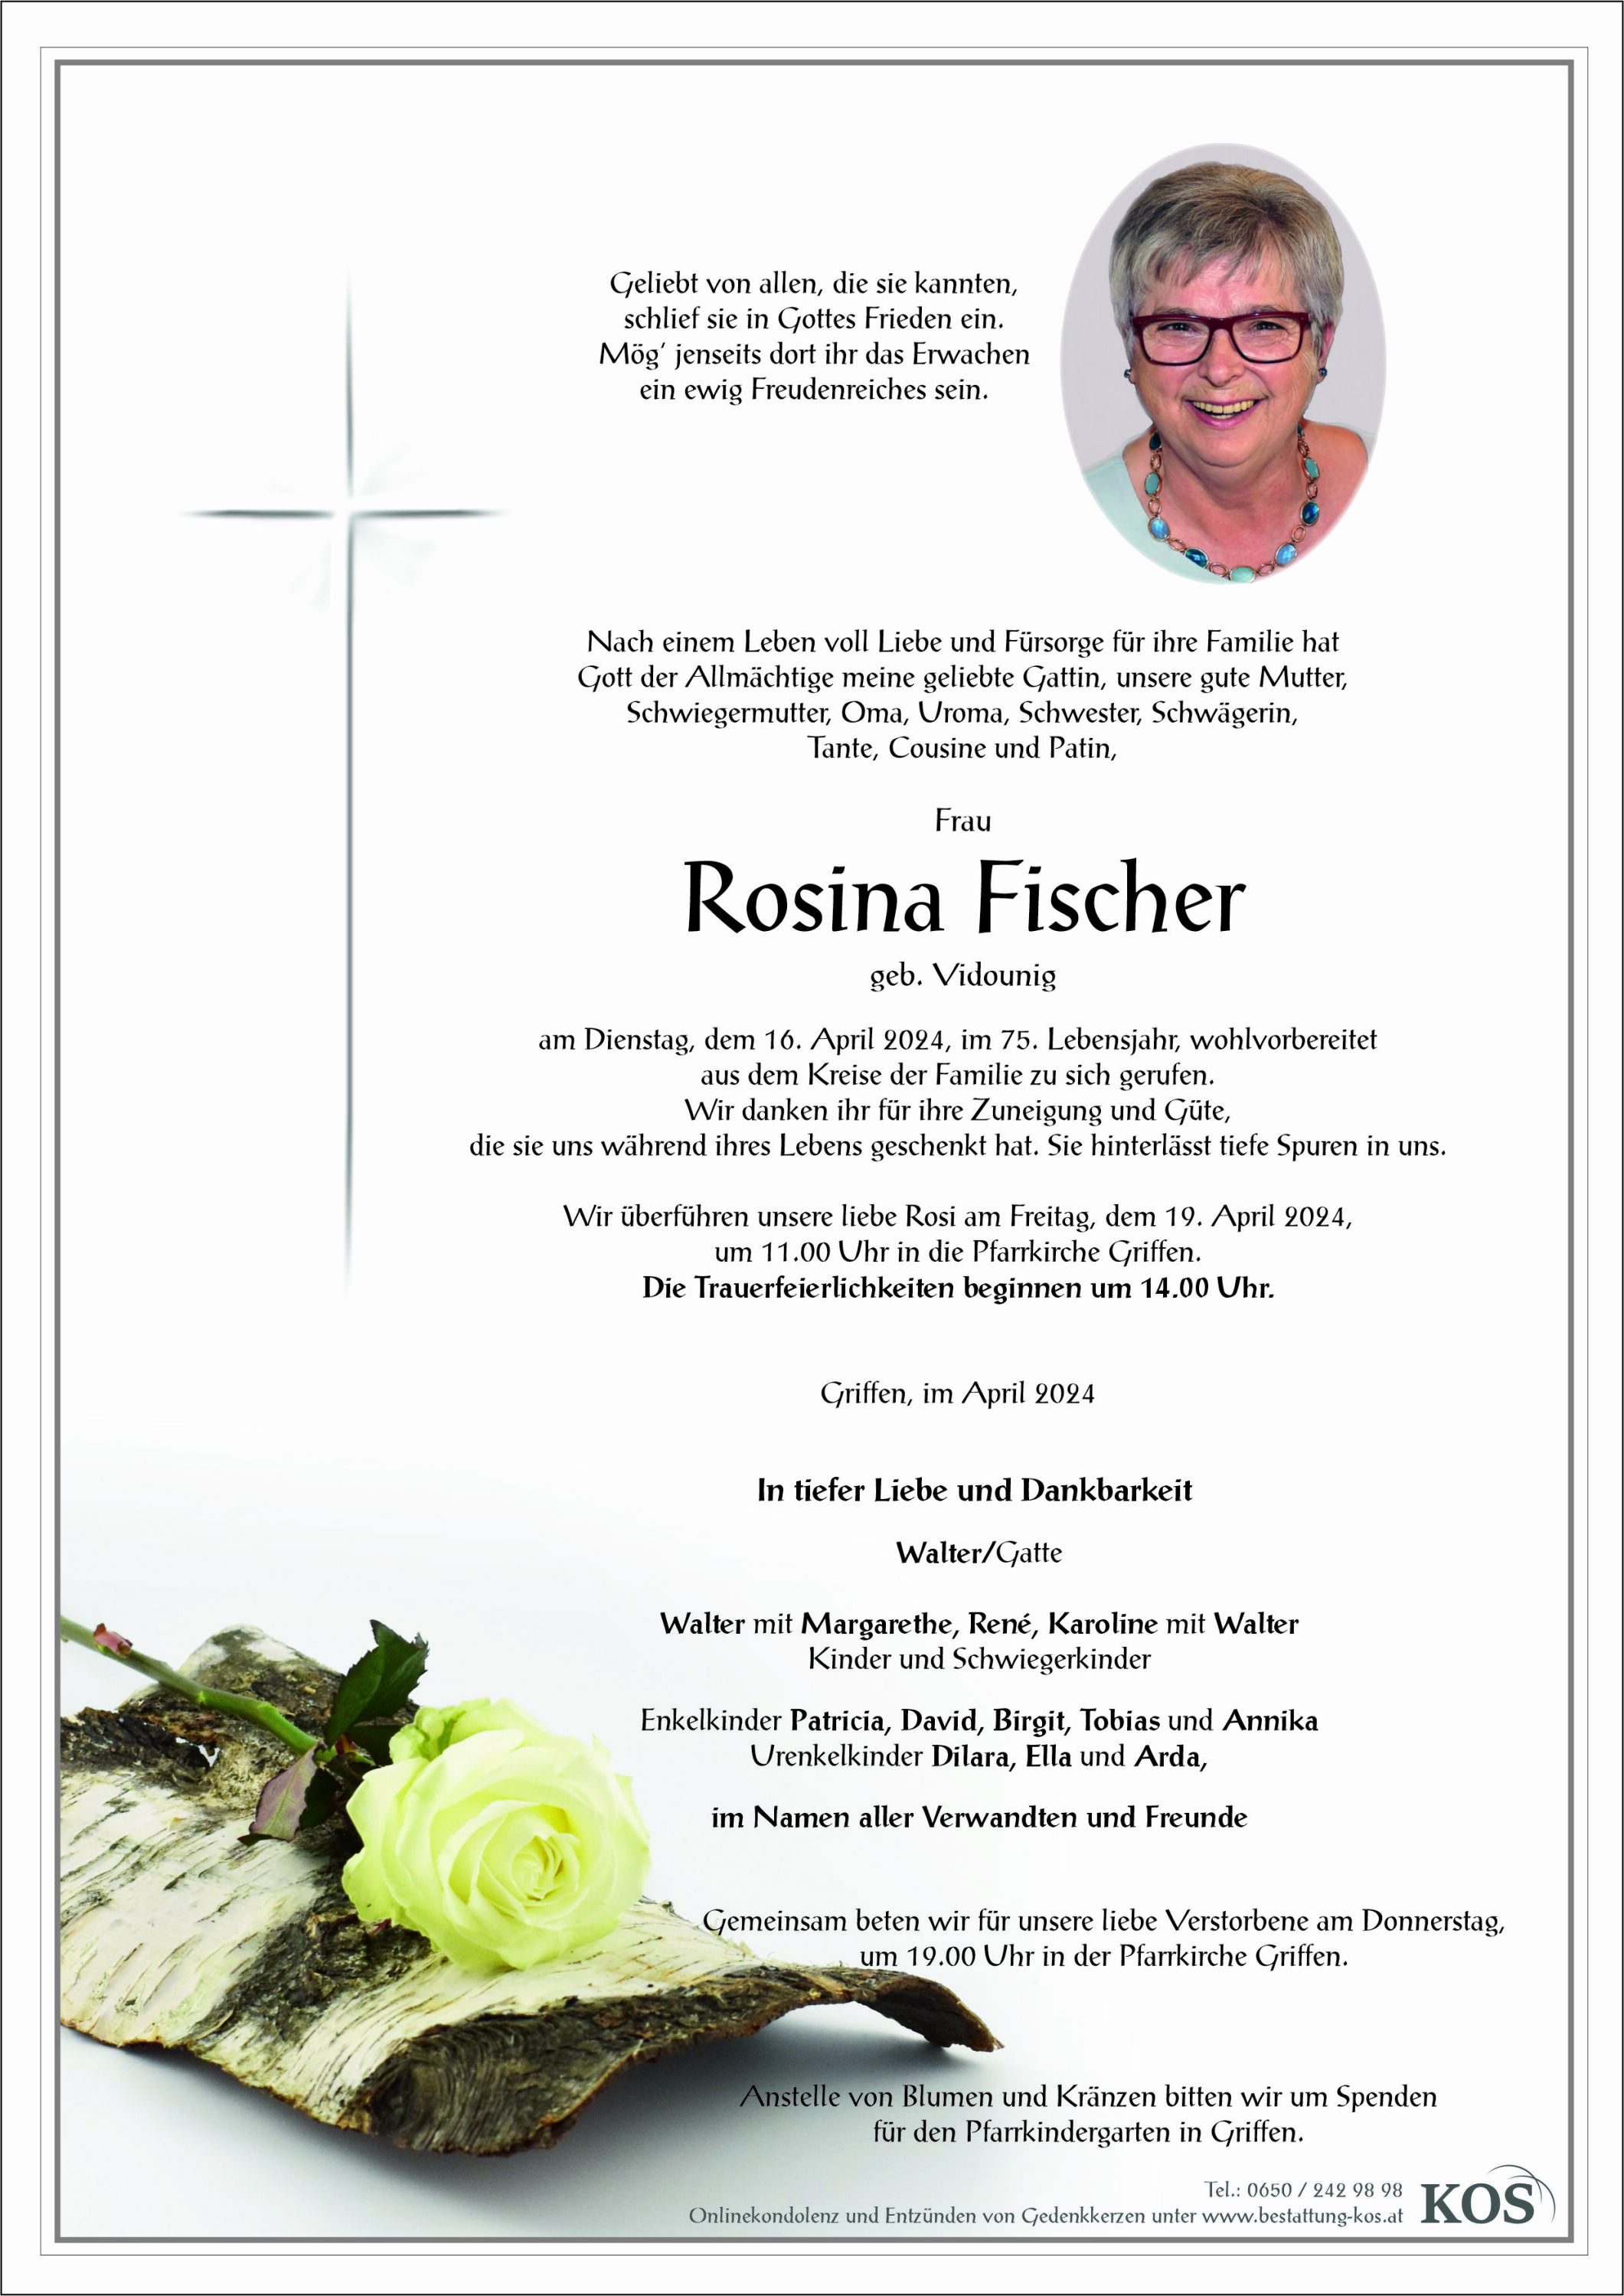 Rosina Fischer